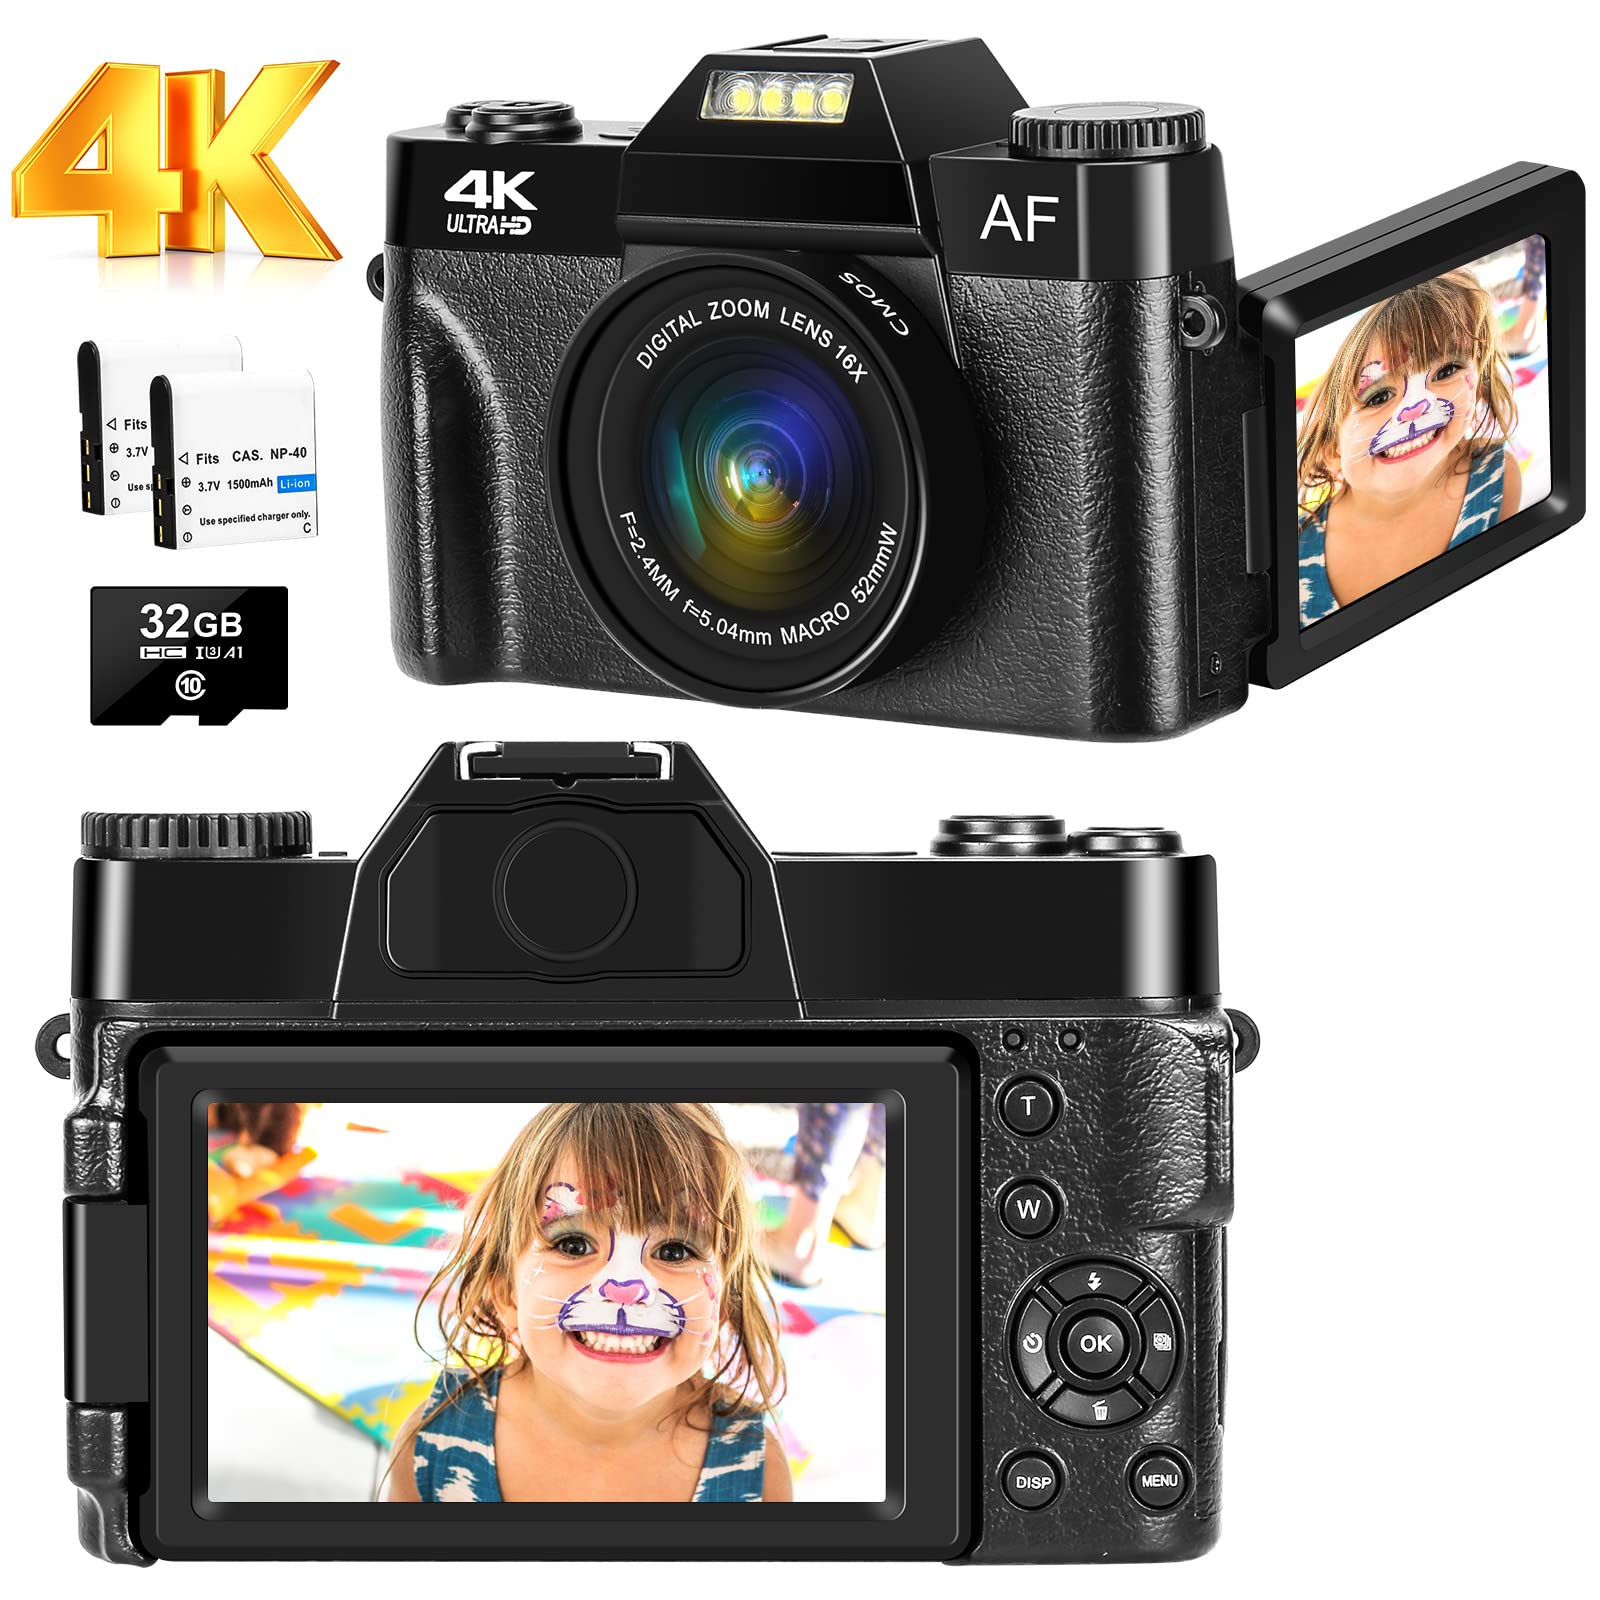 JHAMAL Digitalkamera AutoFocus 4K 48MP Fotokamera 16X Digitalzoom Kompaktkamera 3,0 Zoll 180 Grad Drehung Flip Screen Kamera für Anfänger Erwachsene 32GB Micro SD Karte